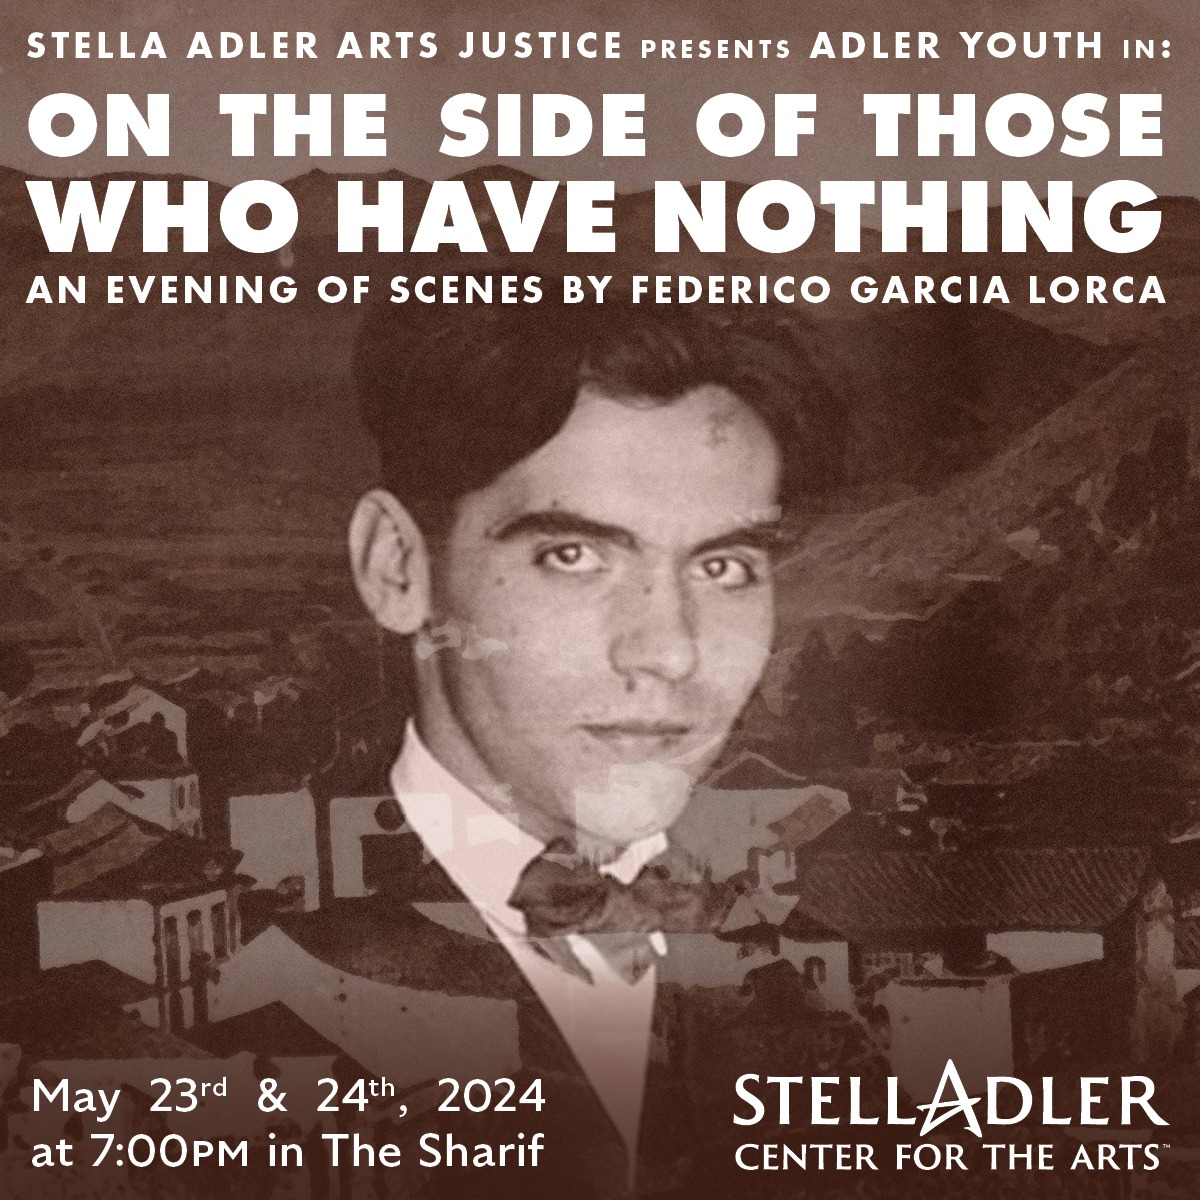 Photograph of Federico Garcia Lorca overlaid on a photo of the Spanish countryside